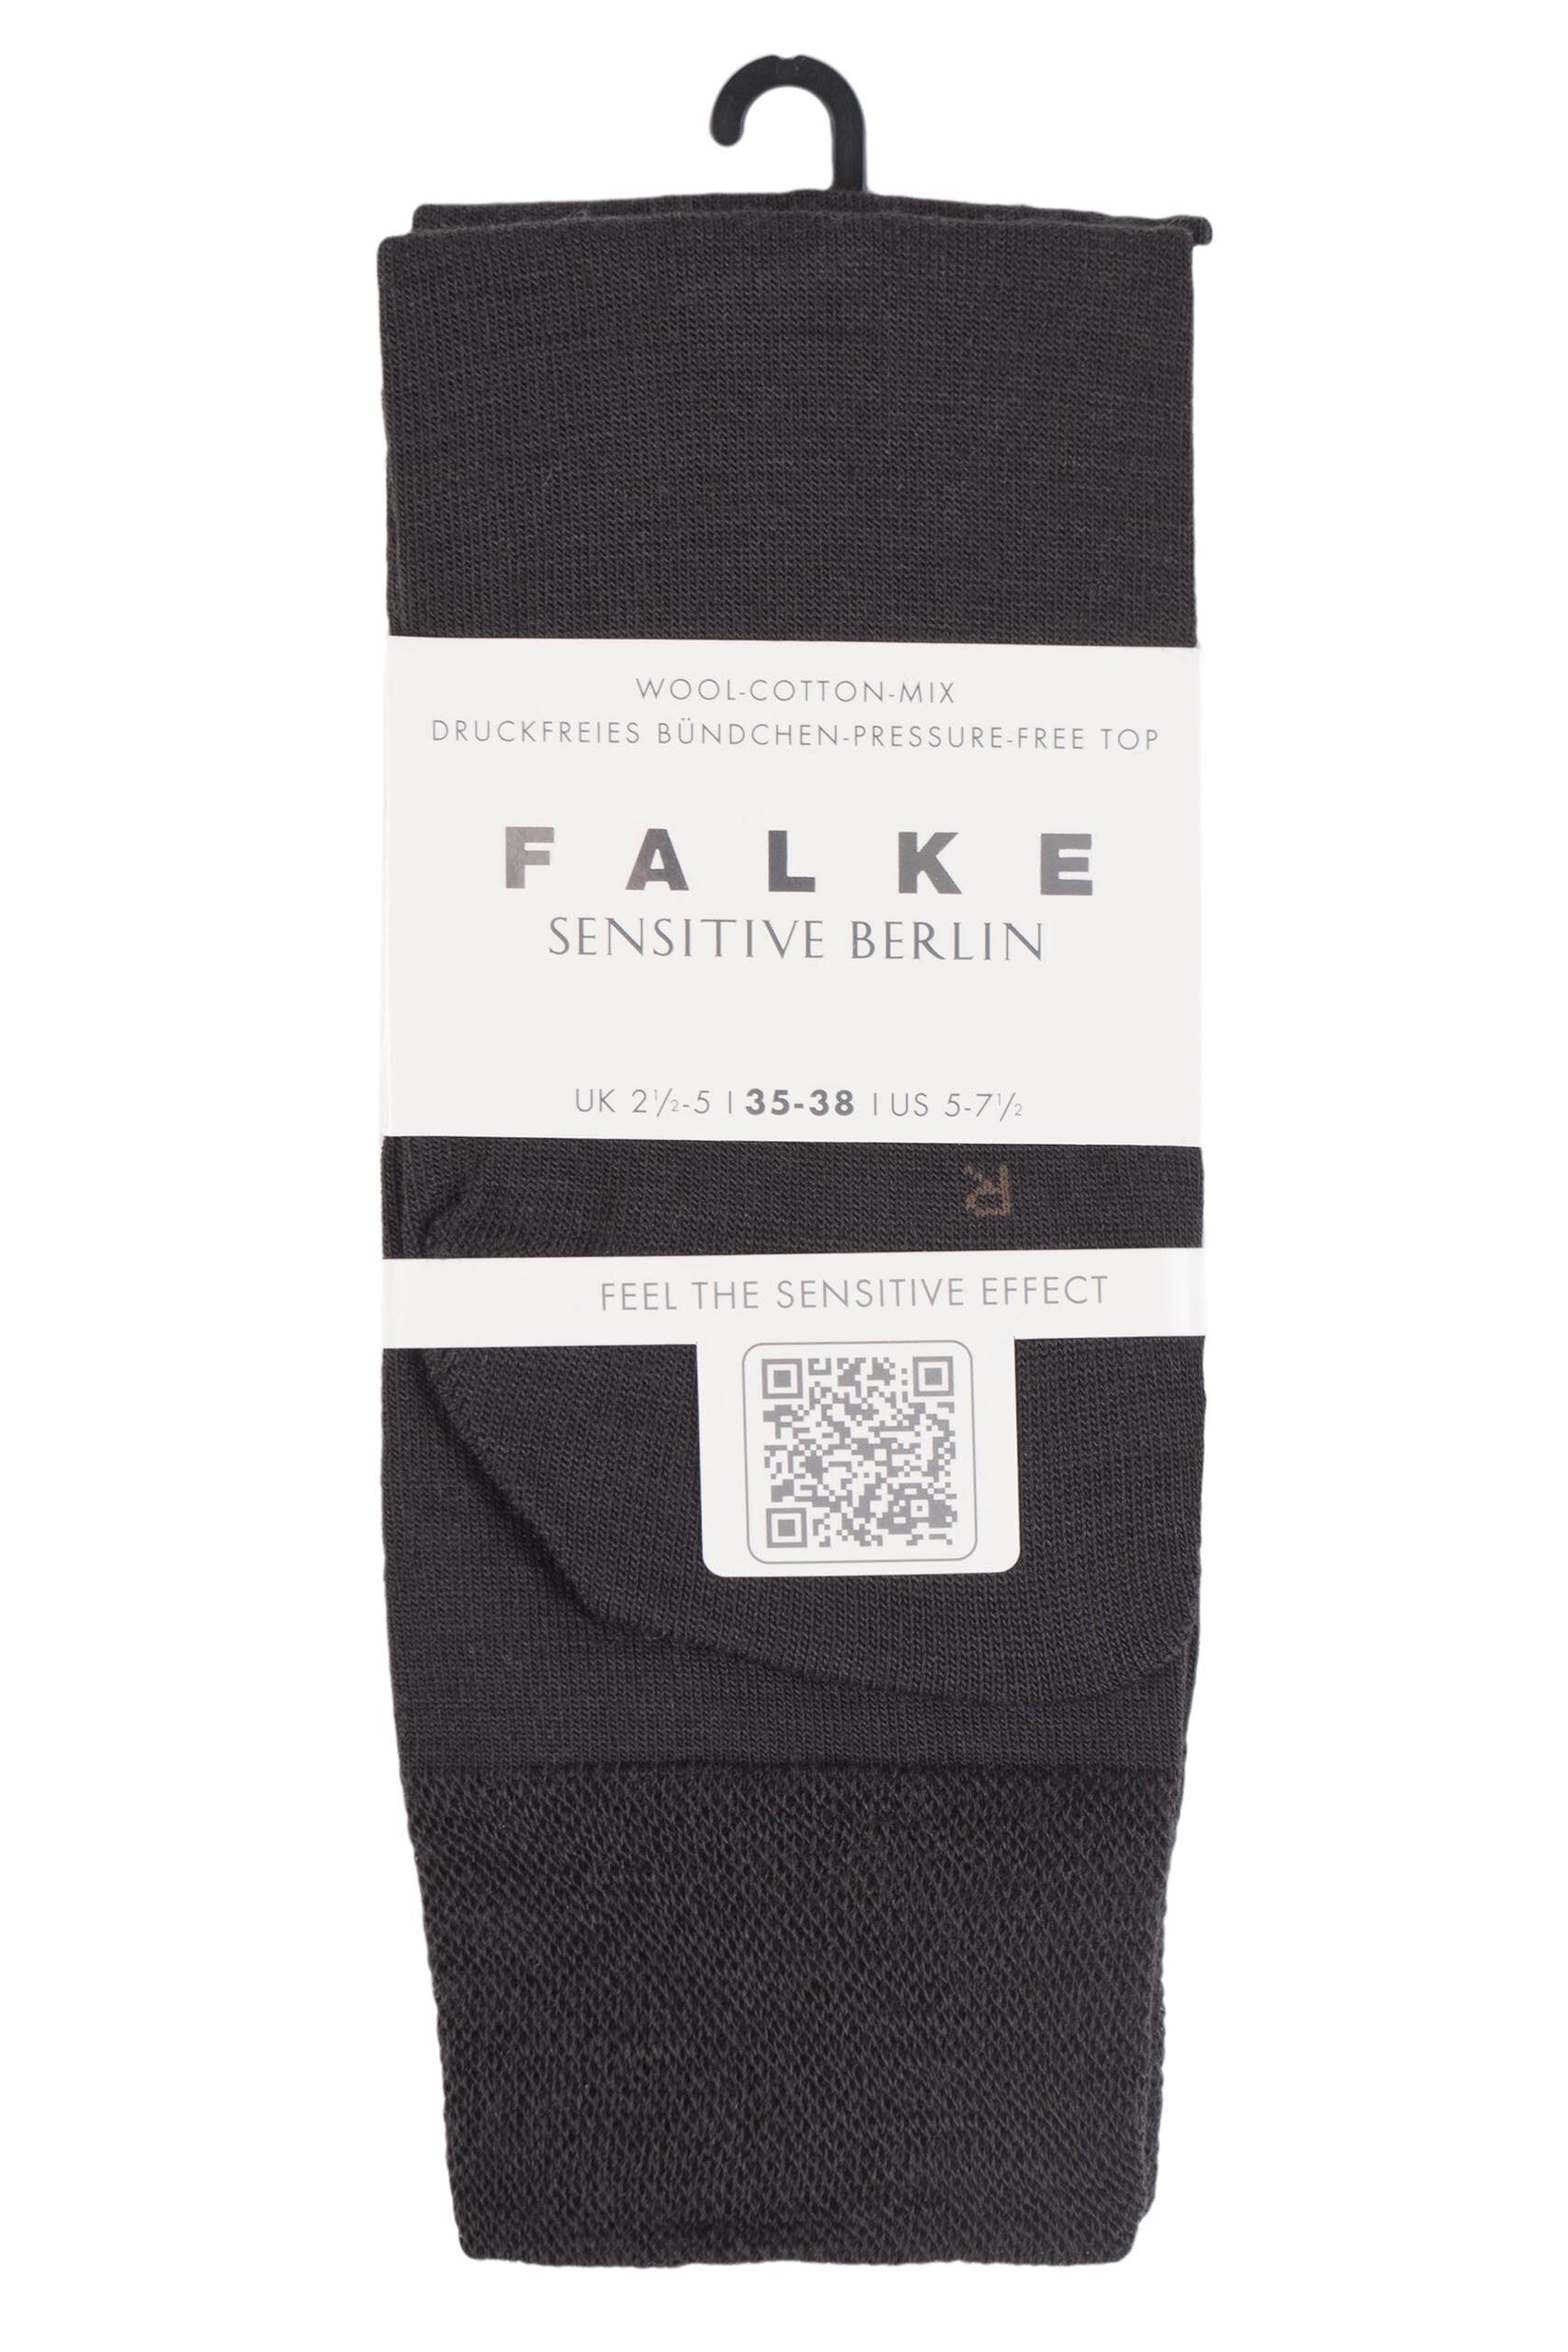  Falke Sensitive Berlin Merino Wool Left And Right Comfort Cuff Socks